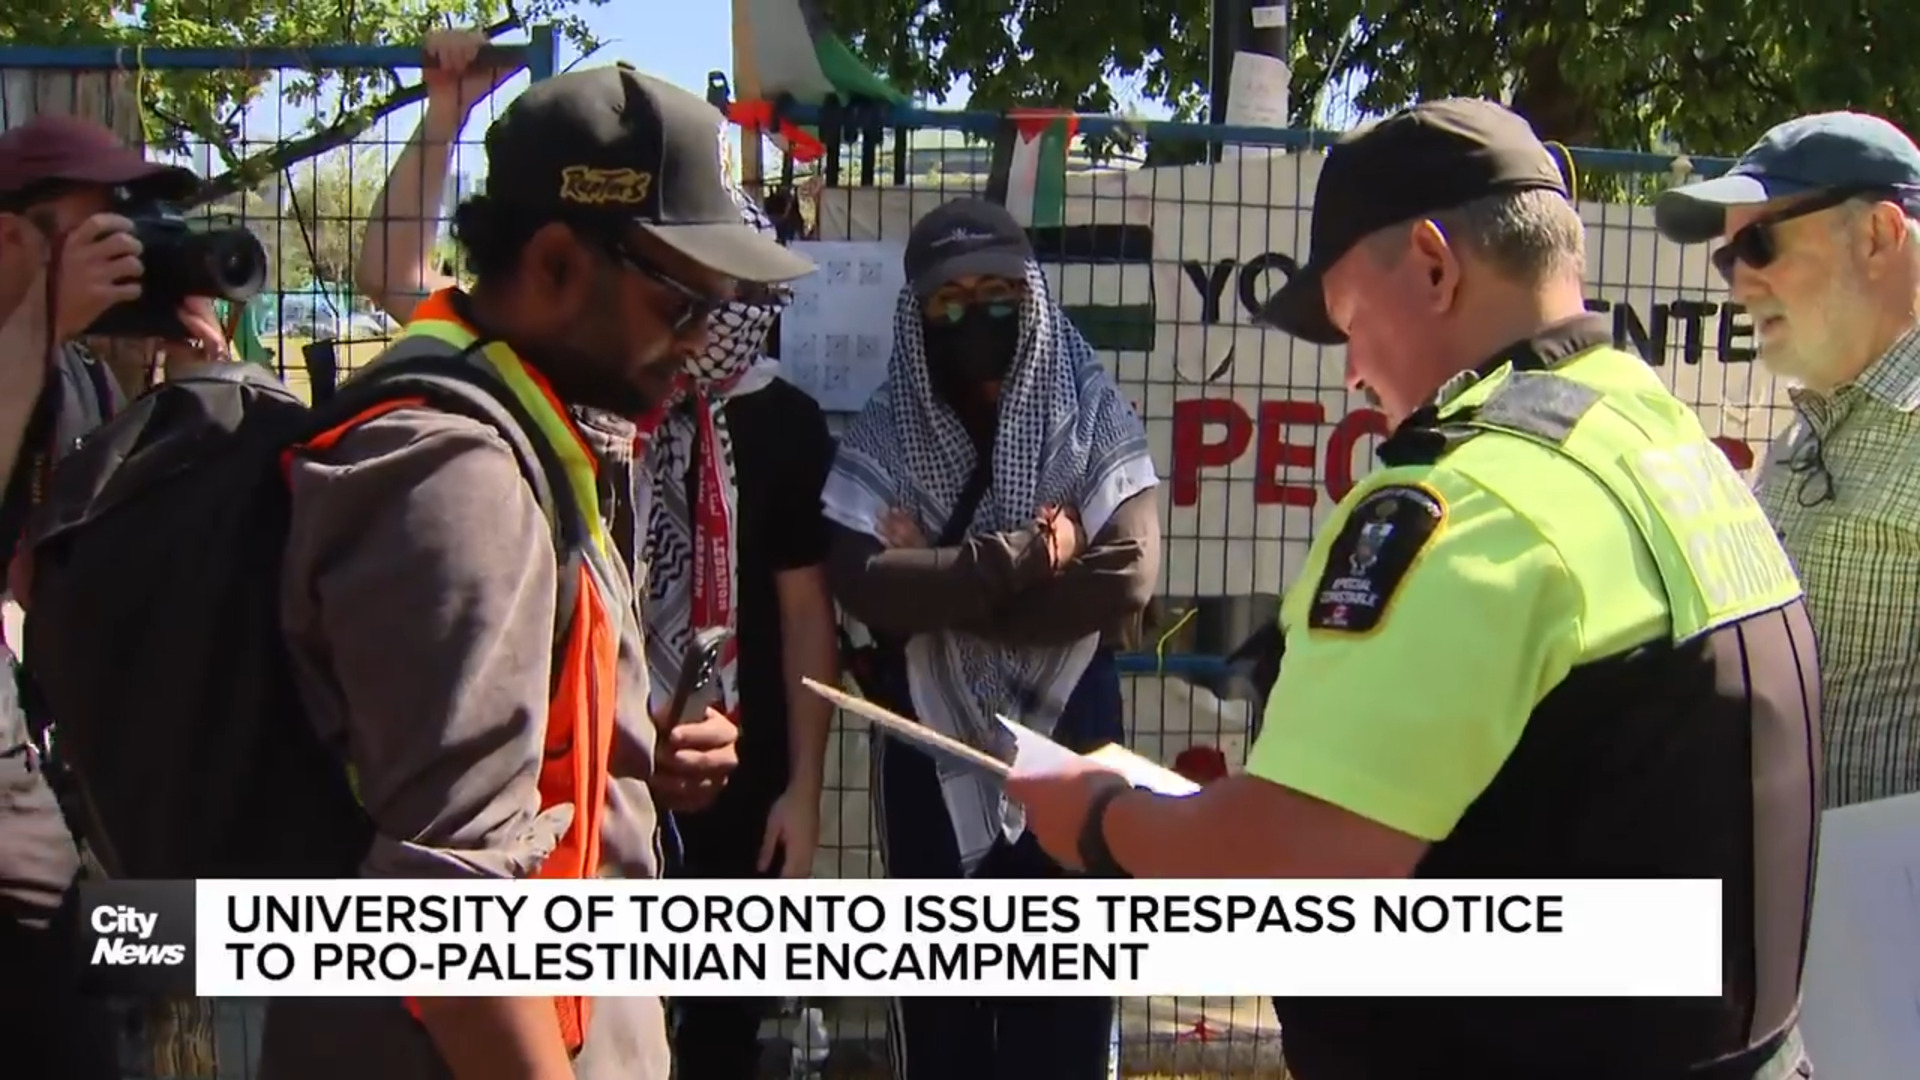 University of Toronto delivers trespass notice to pro-Palestinian encampment